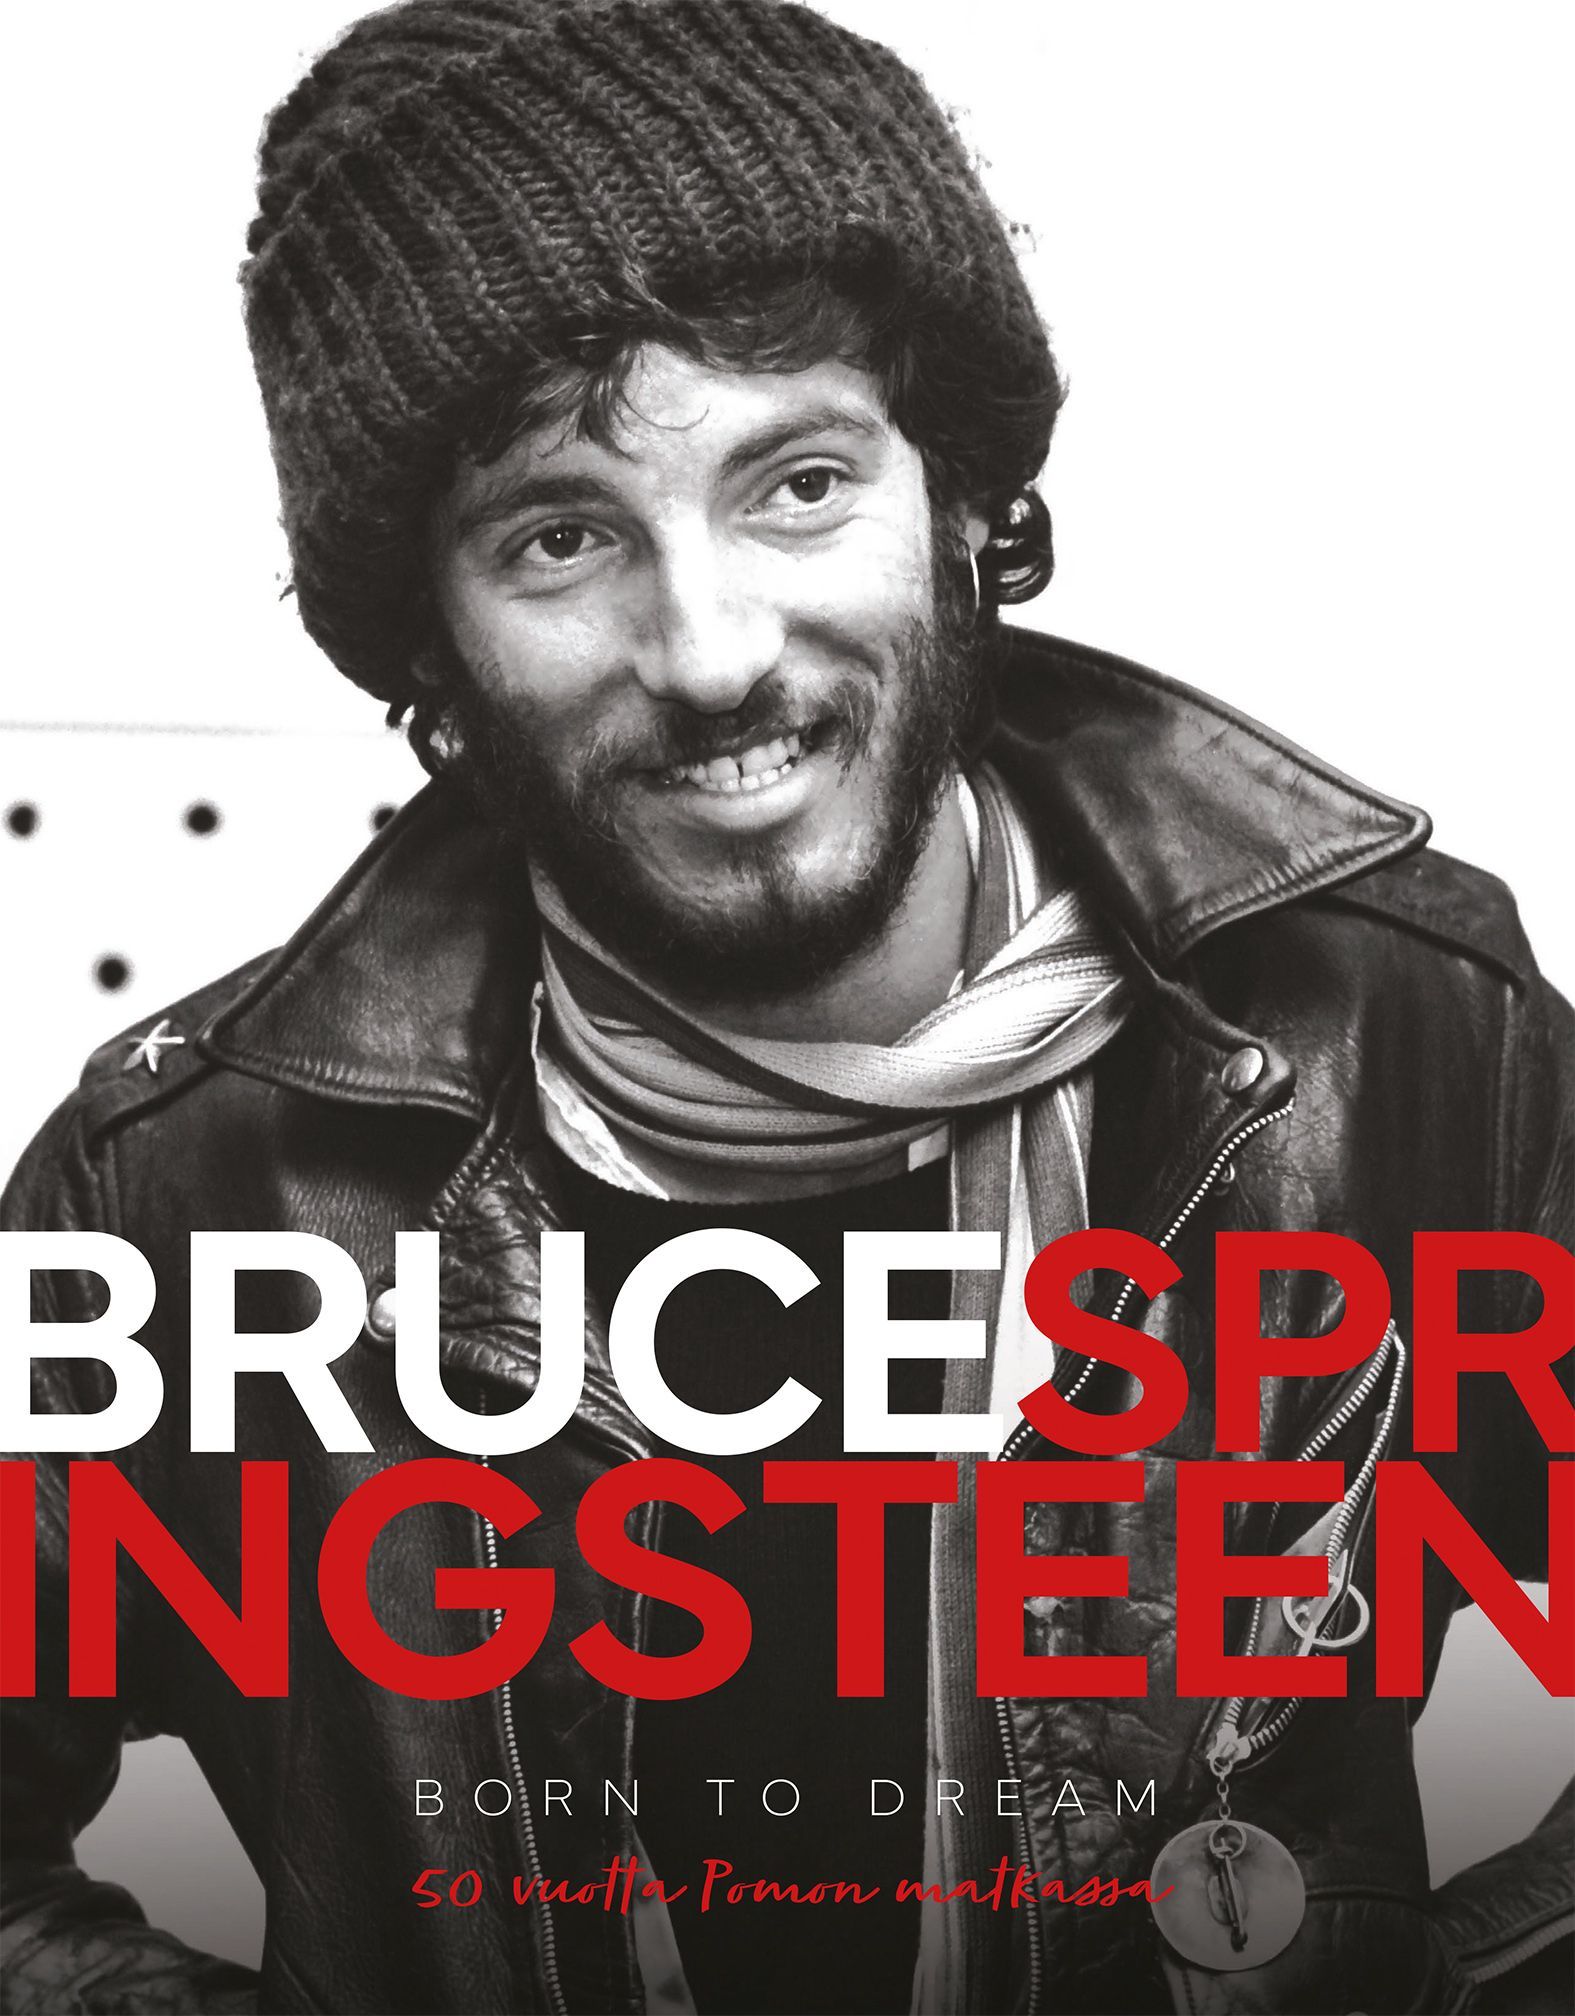 Alison James : Bruce Springsteen - Born to dream - 50 vuotta Pomon matkassa